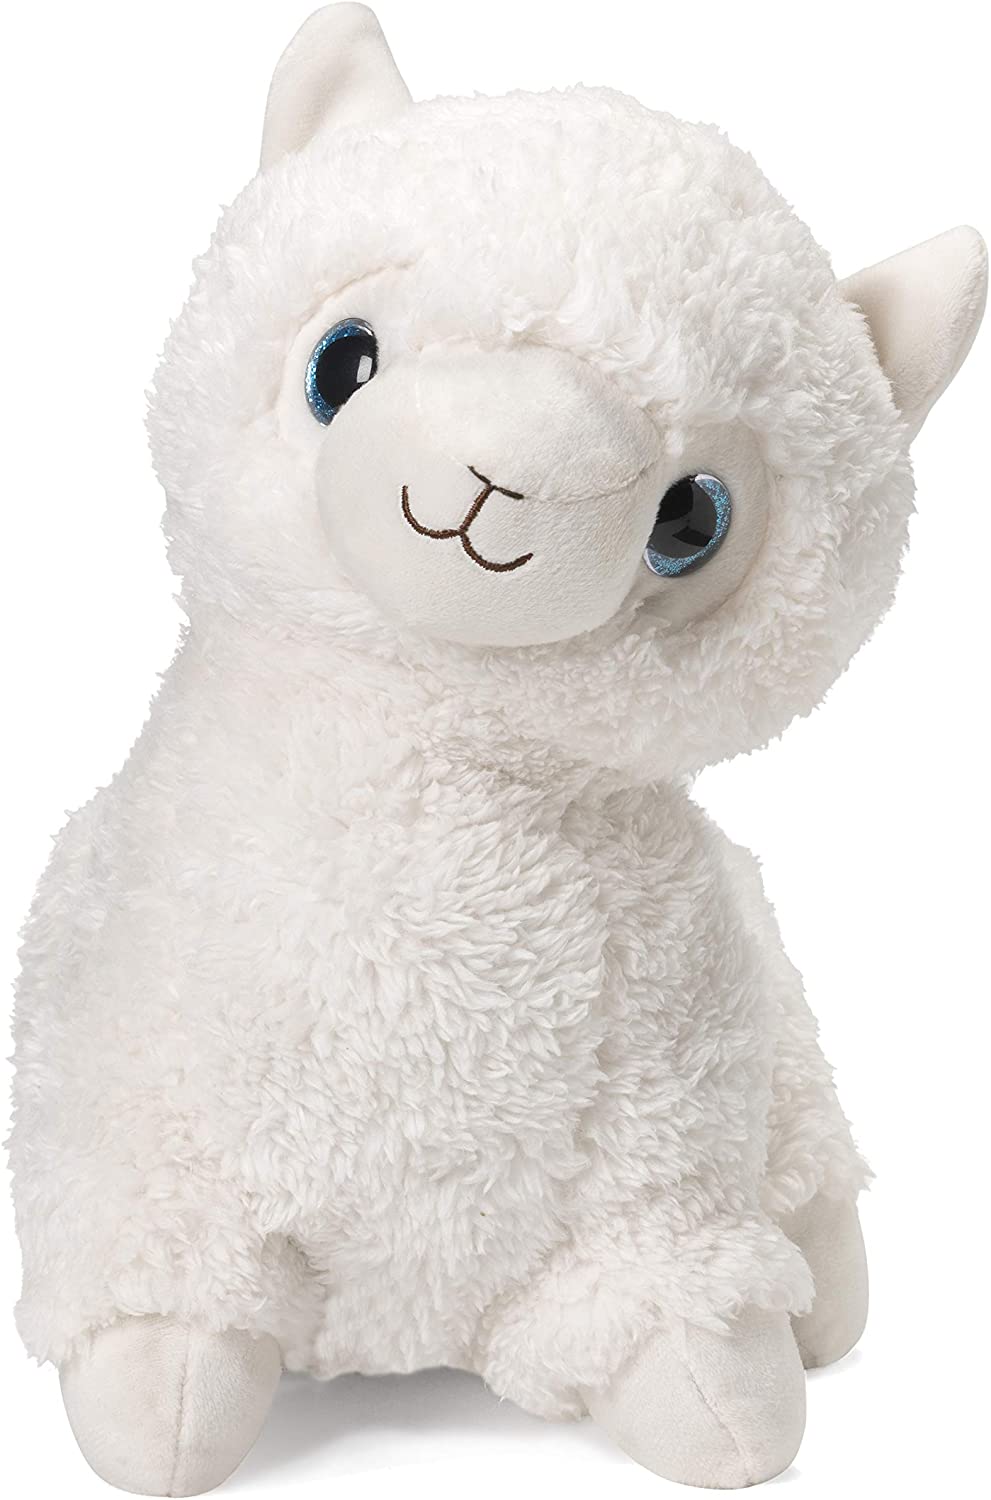 Shaggiest and Fluffiest Stuffed Llama